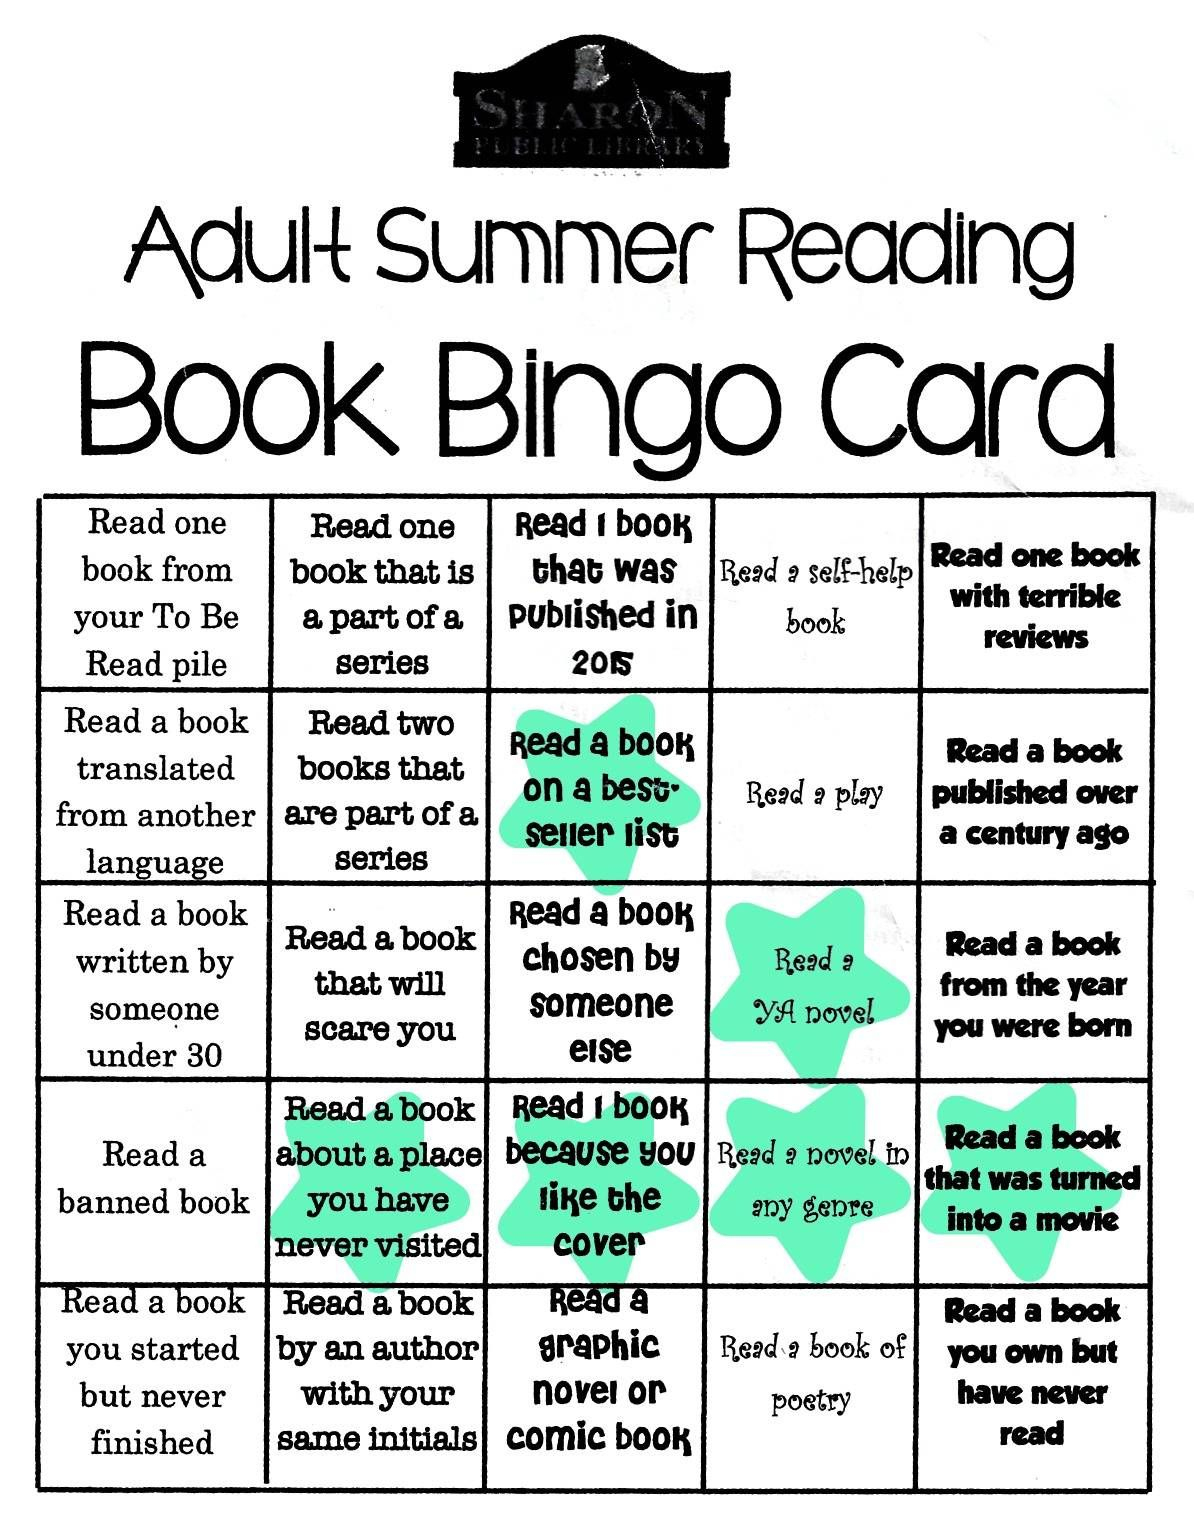 Adult Summer Reading Book Bingo Card From Sharon Public